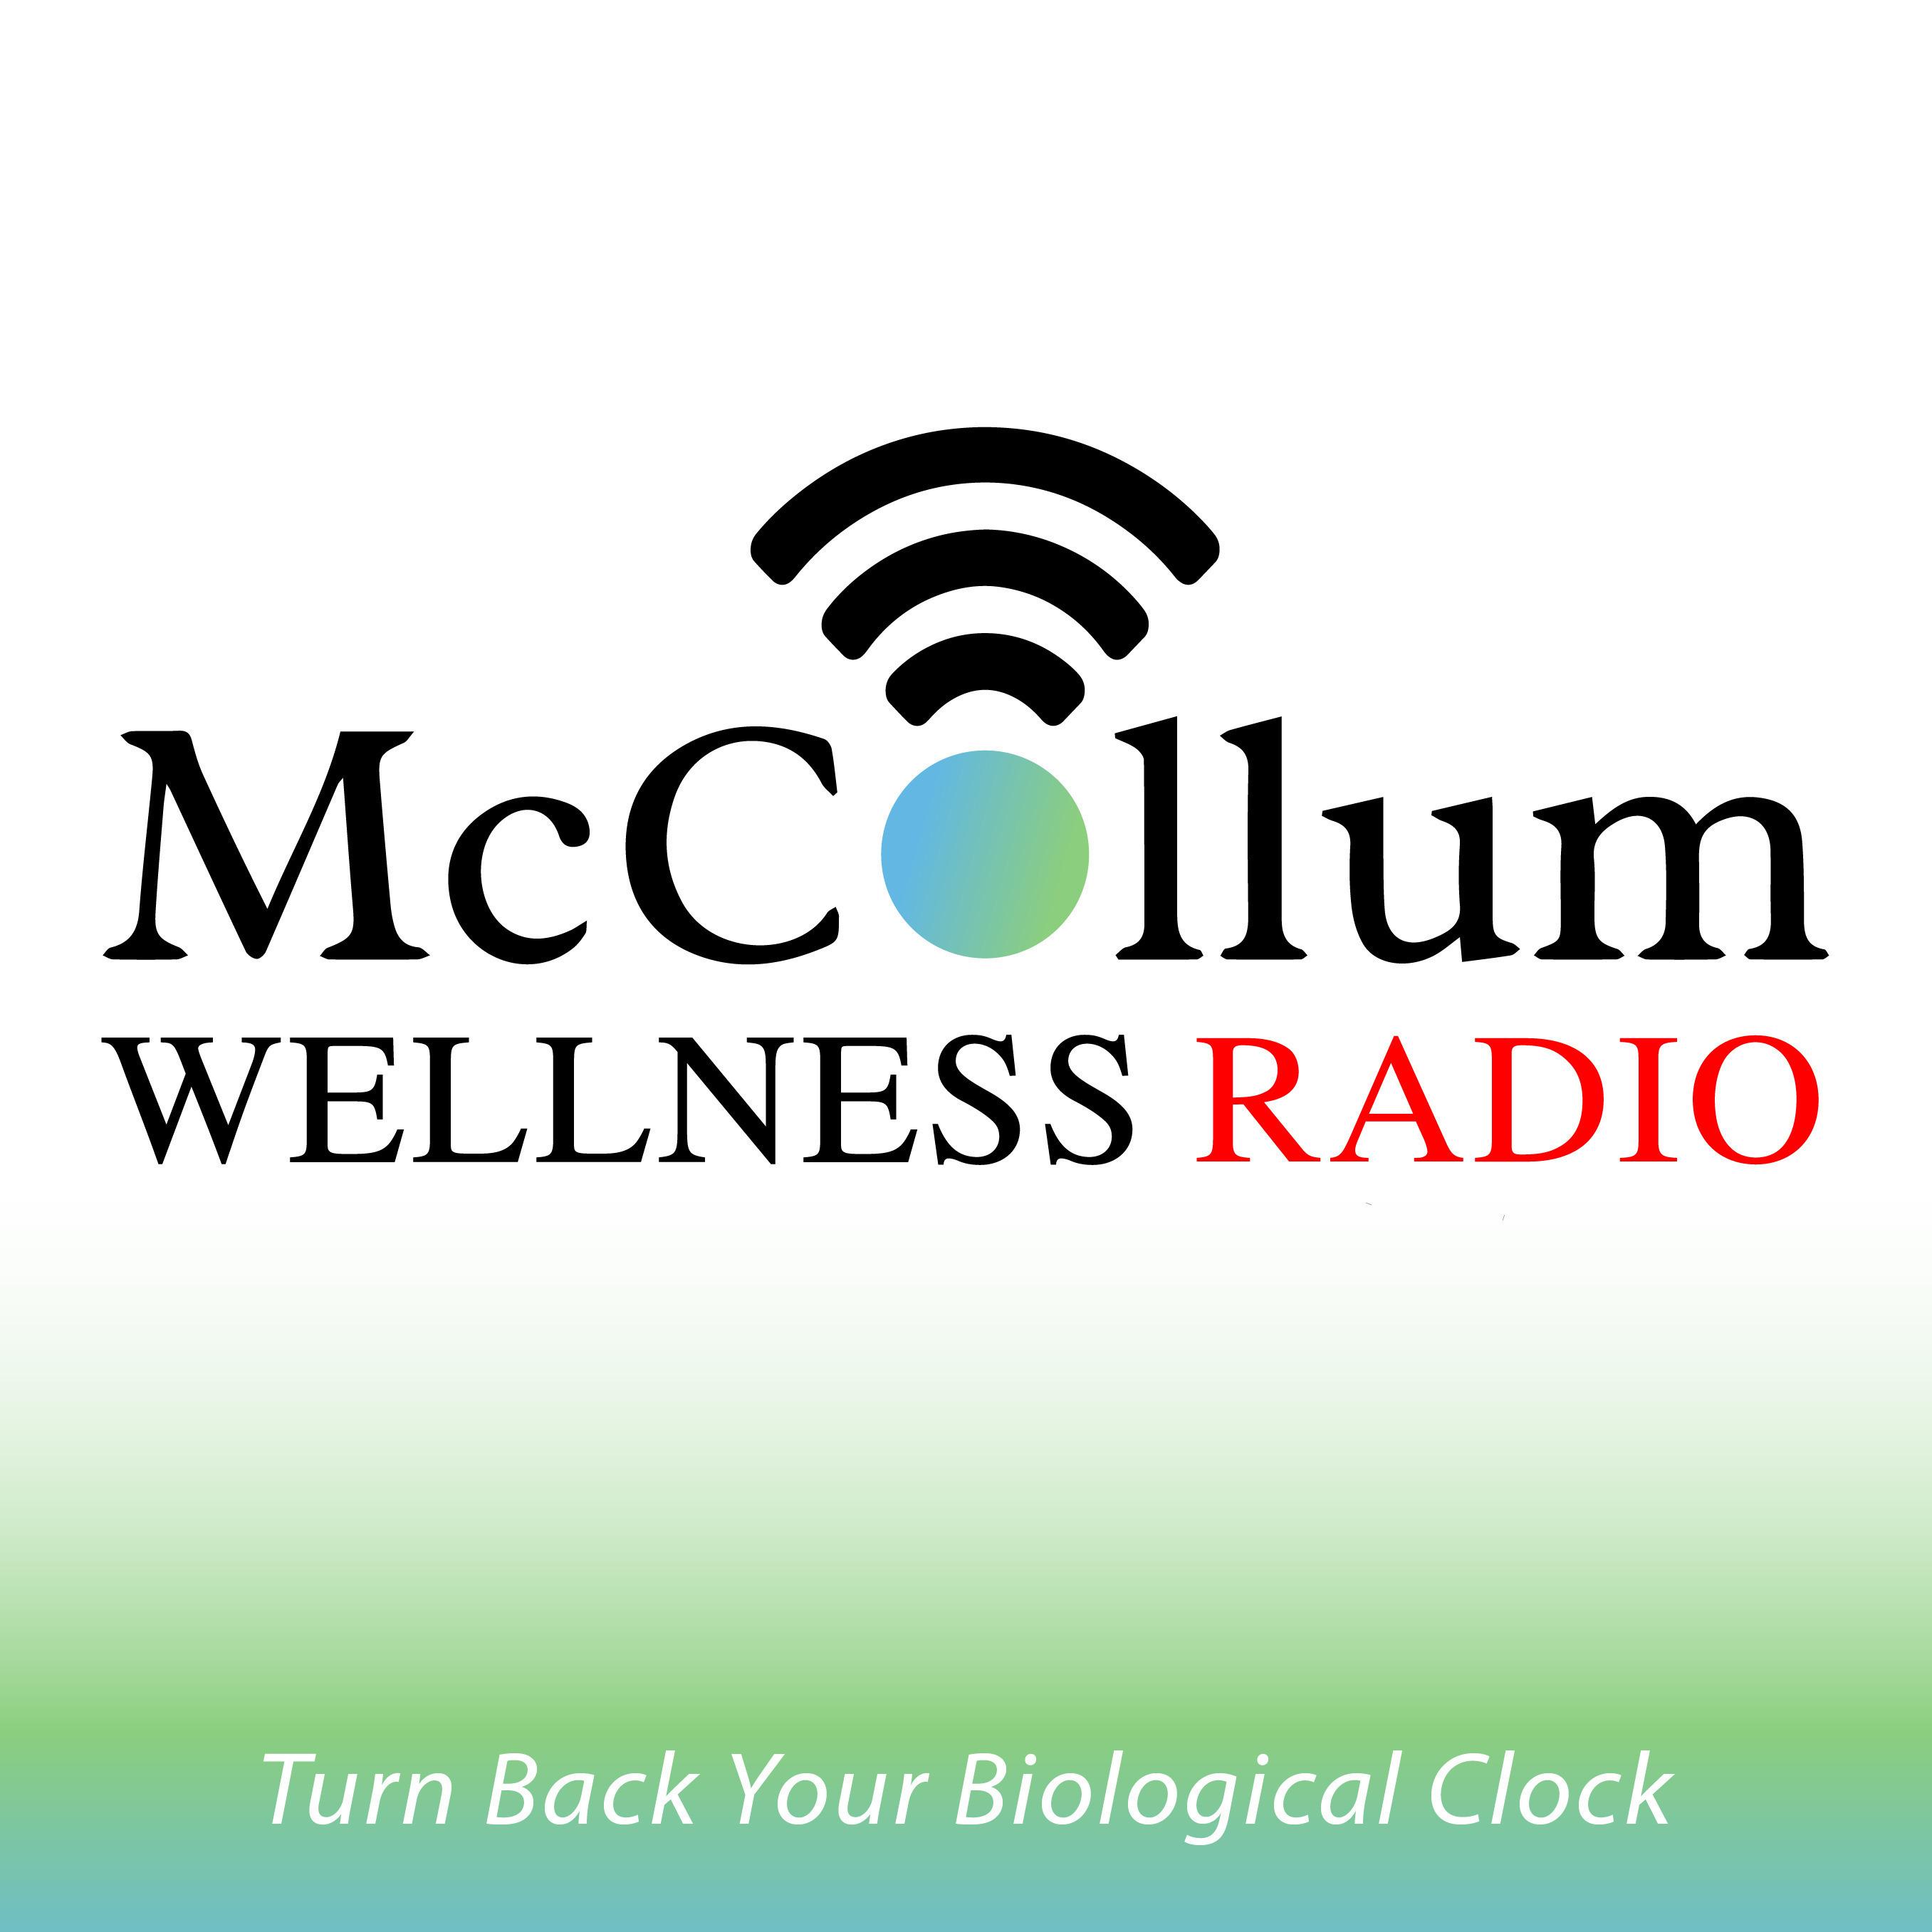 McCollum Wellness Radio